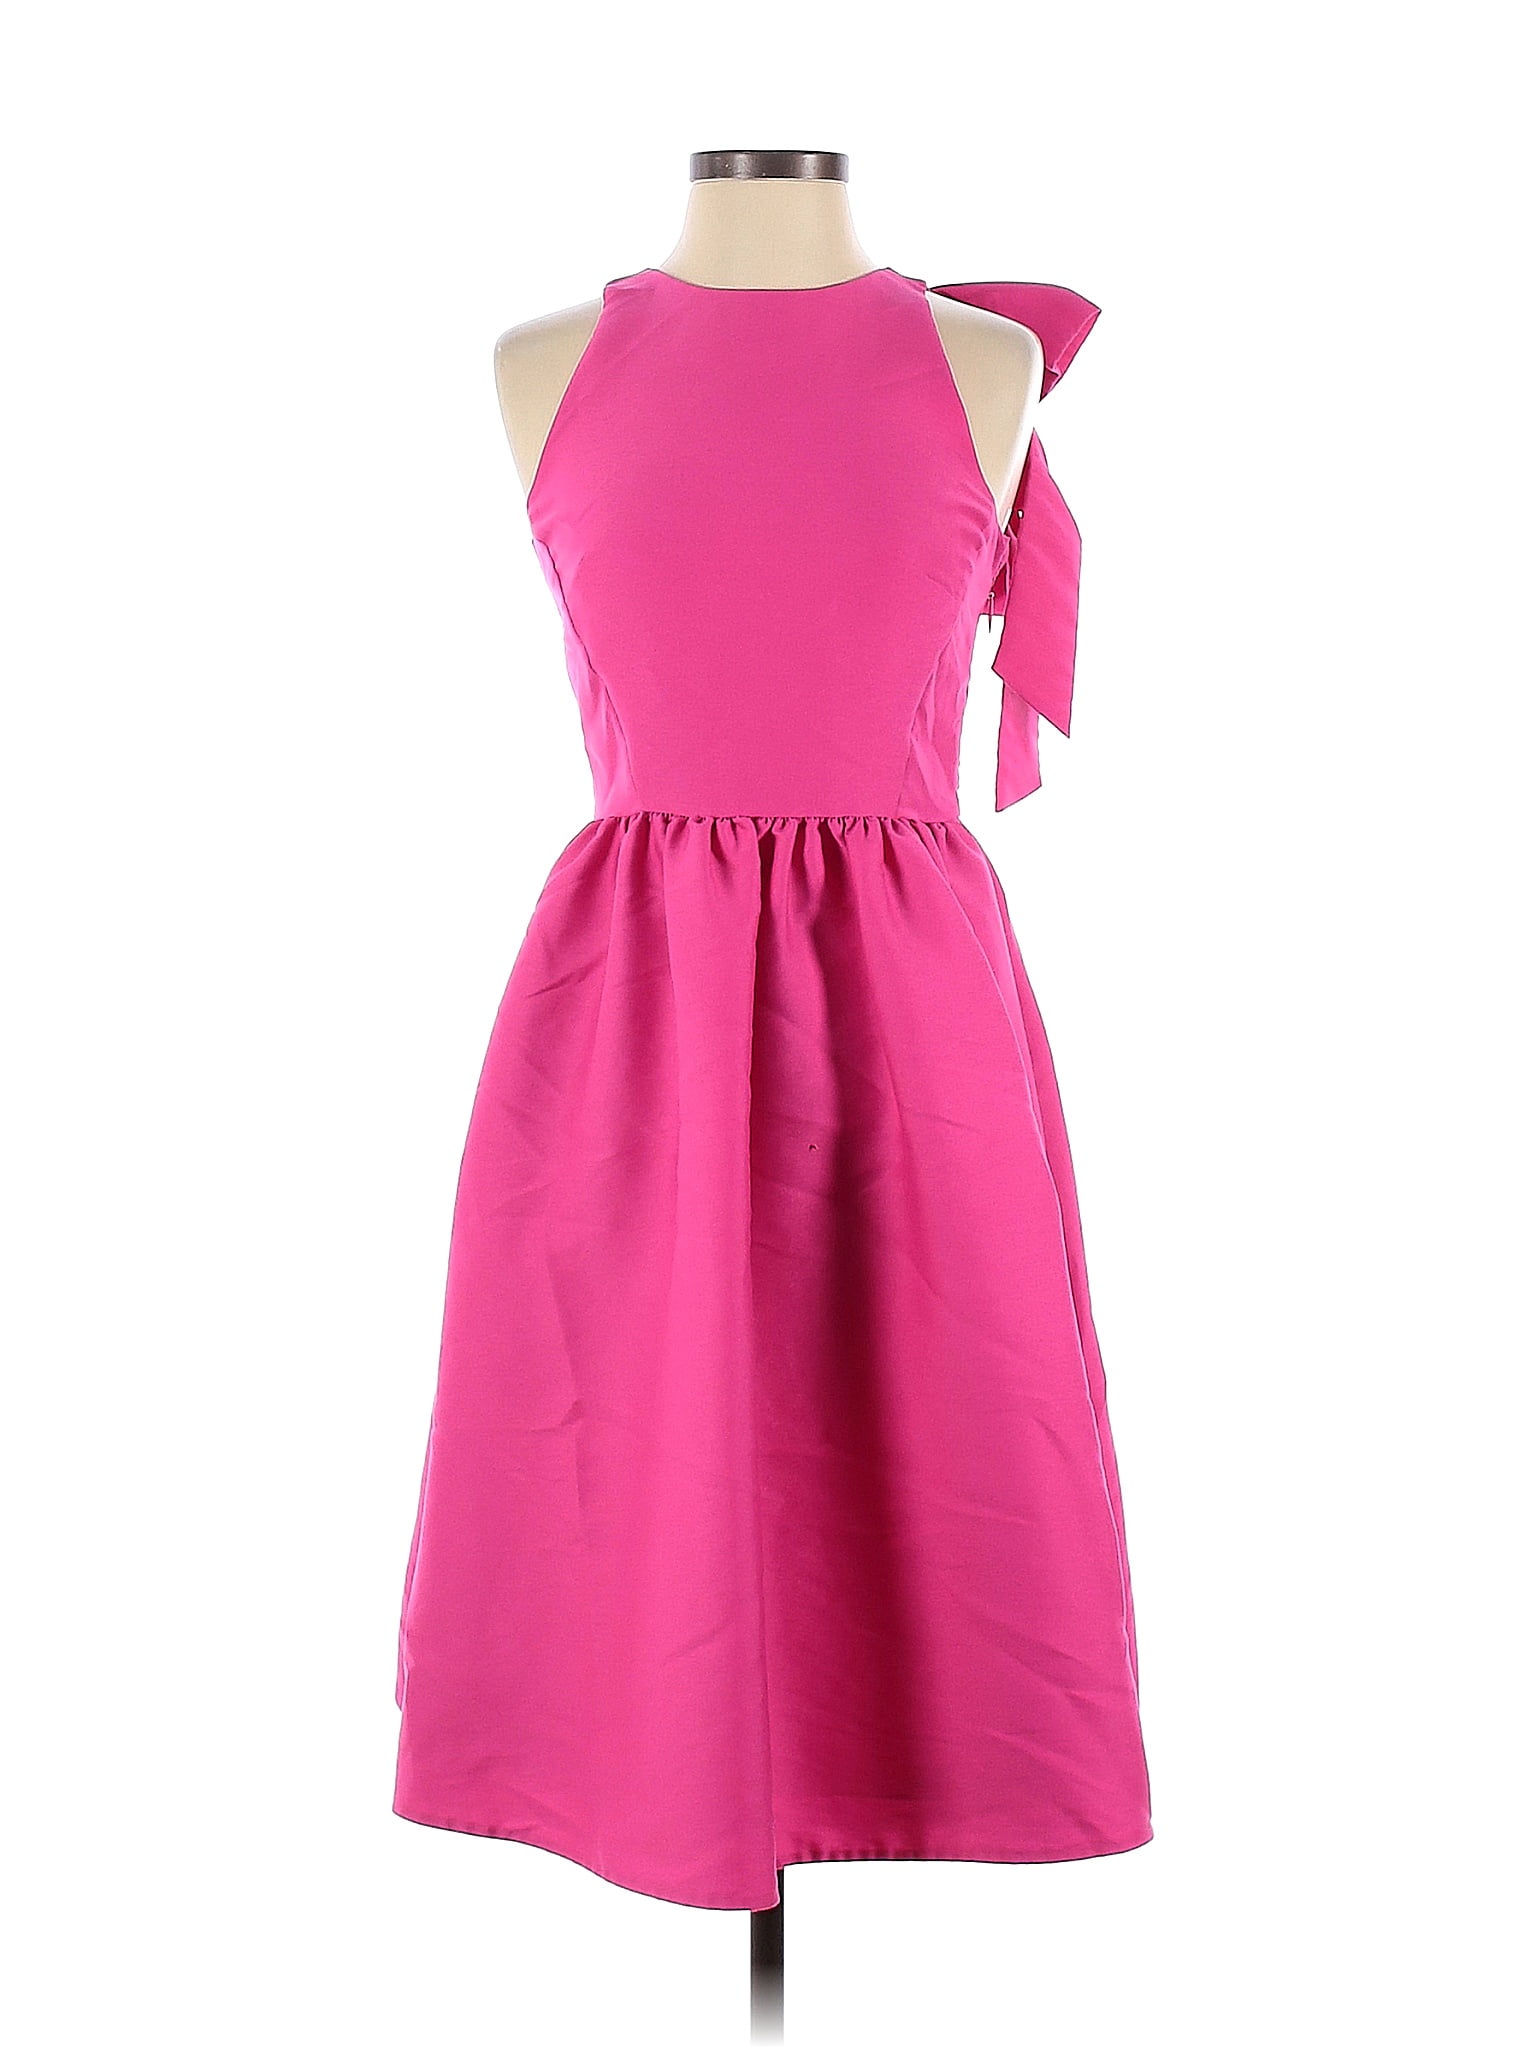 kate spade, Dresses, Kate Spade New Yorkbackless Bowback Dress Pink